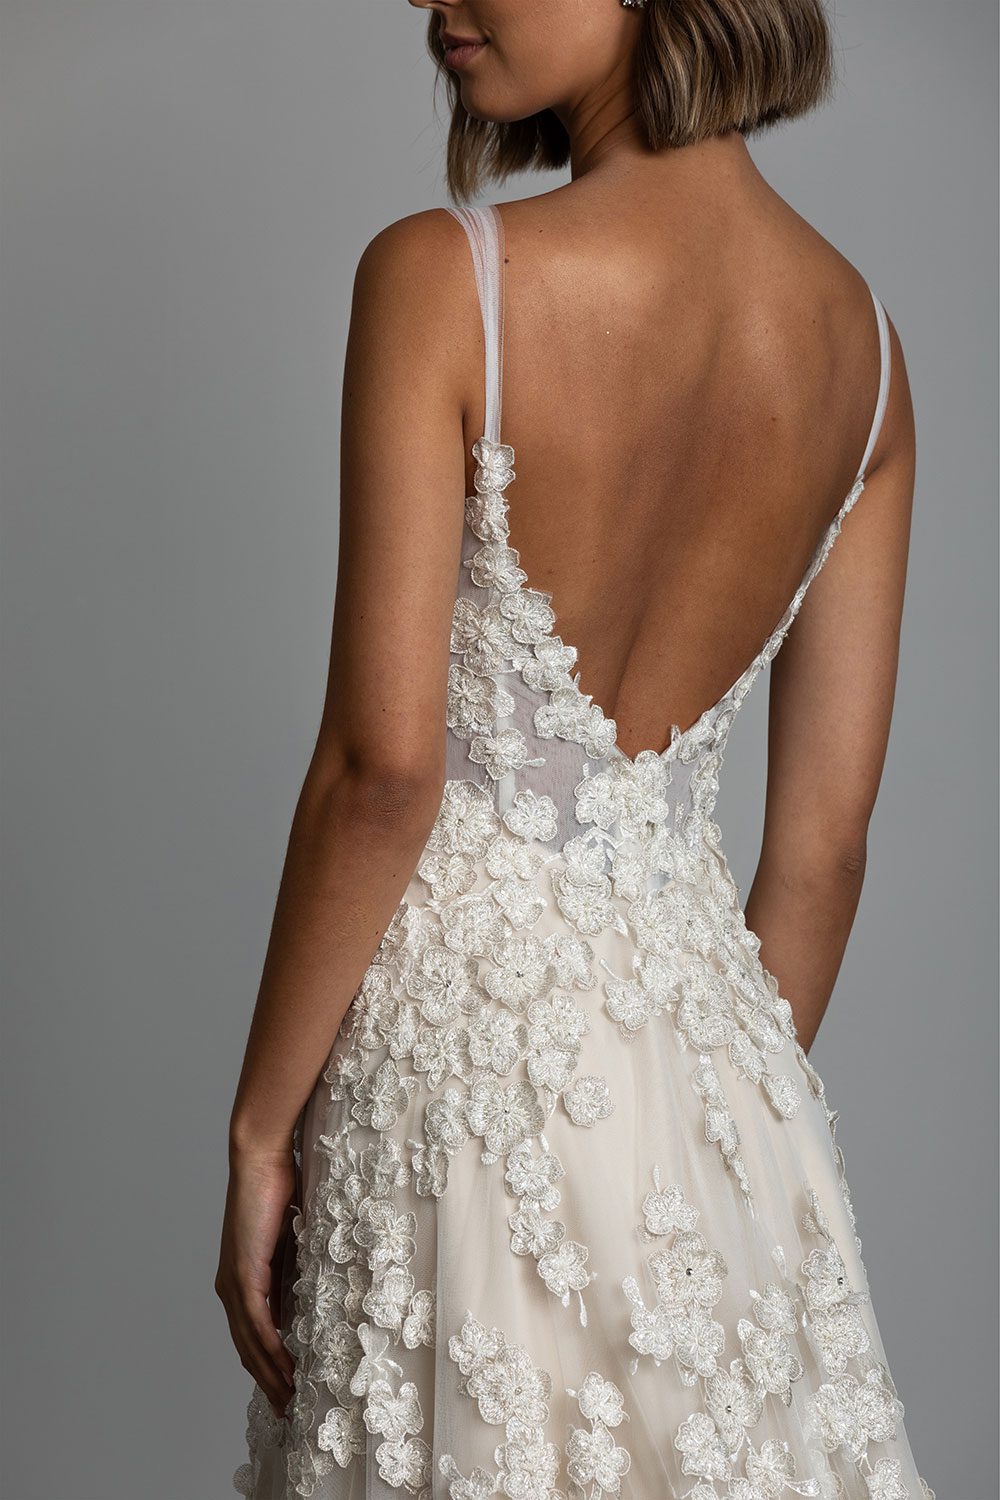 Maree Wedding Dress by Vinka Design 2